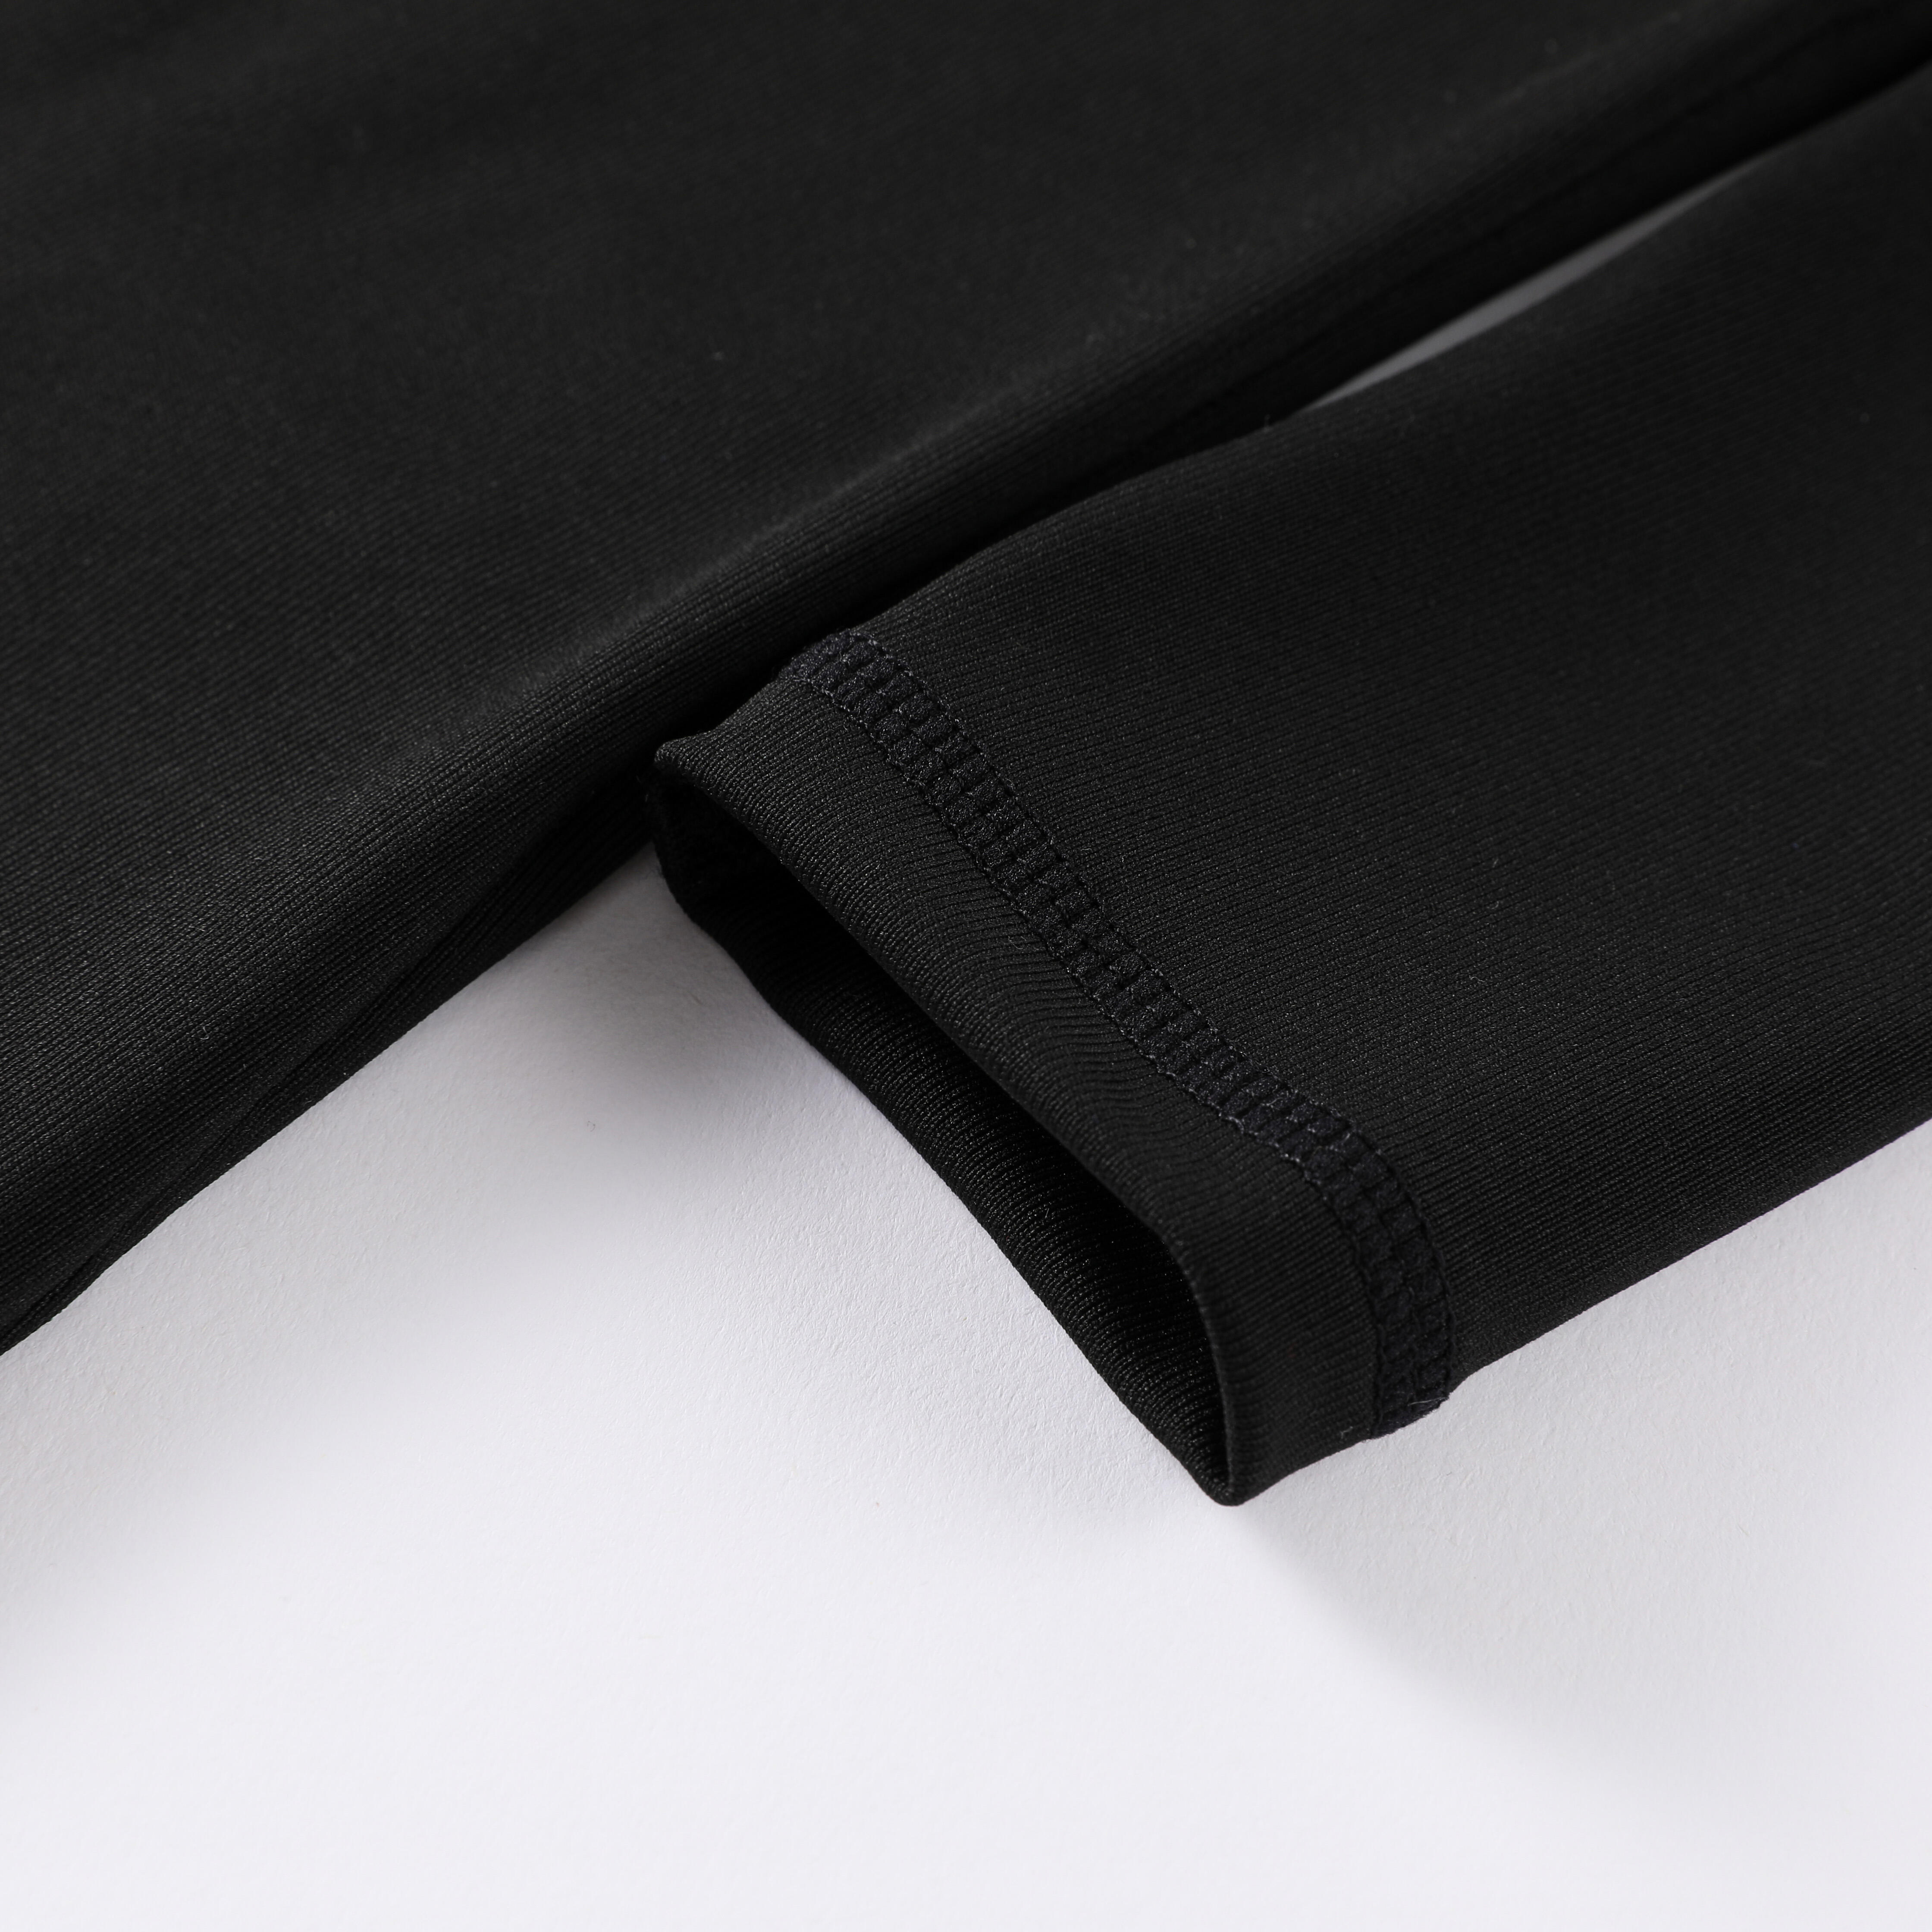 Kids' Long-Sleeved Thermal Base Layer Top Keepcomfort 100 - Black - KIPSTA